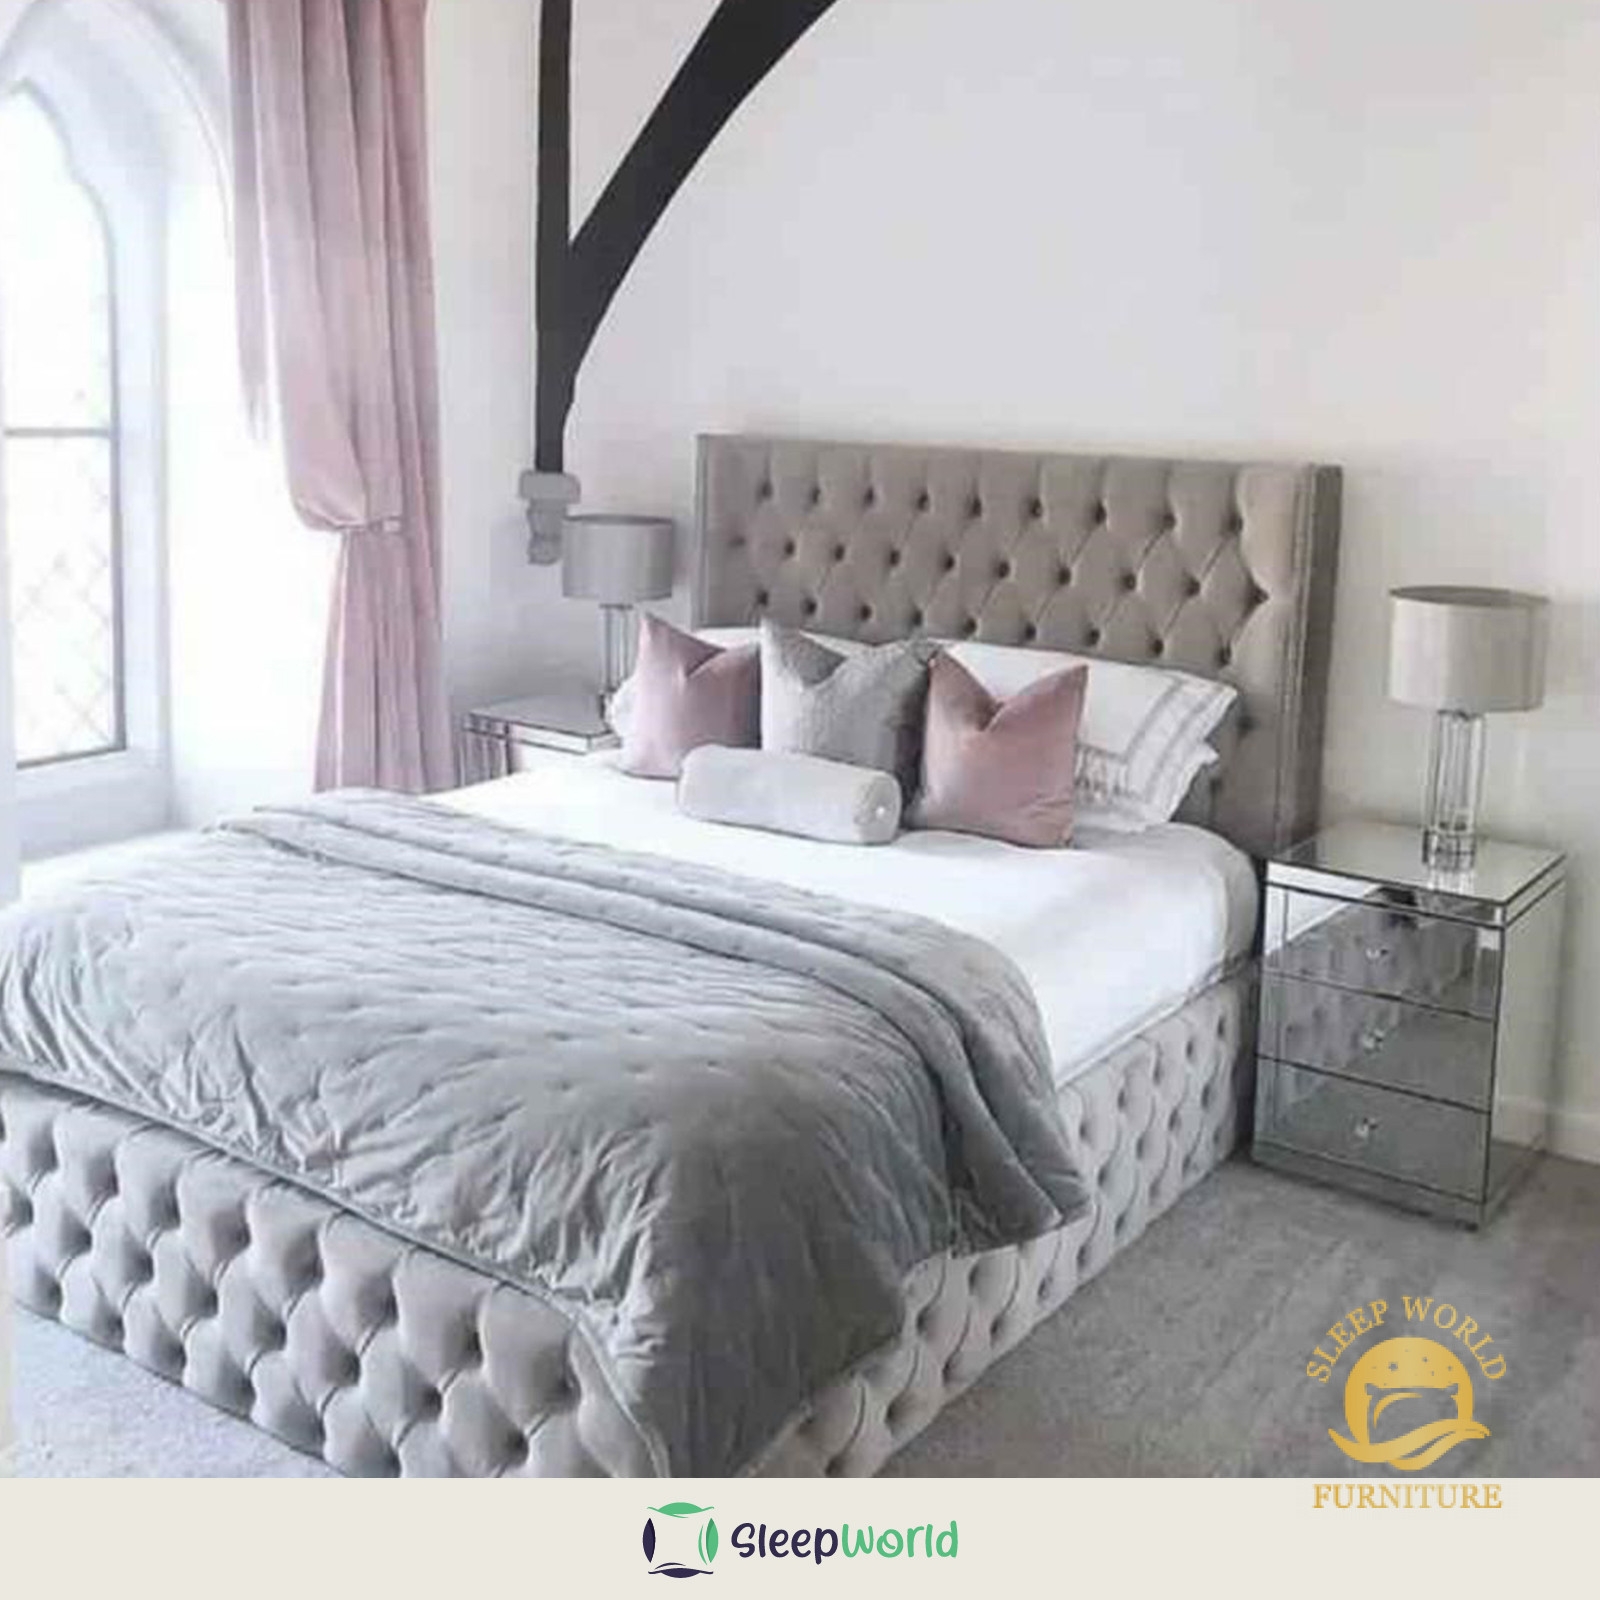 Milano Wing Bed – Single – 3FT – Gas Lift Ottoman Base – Optional Mattress – Upholstered – Sleep World Furniture